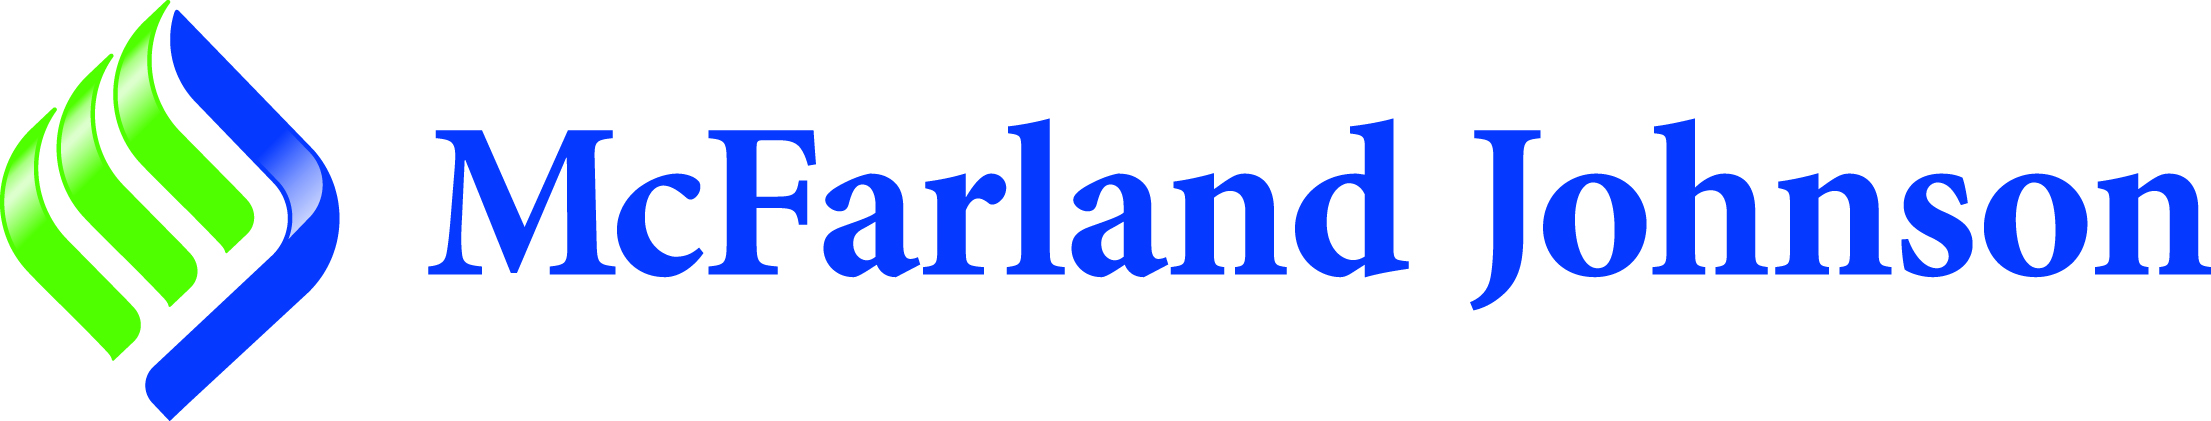 mcfarland johnson logo